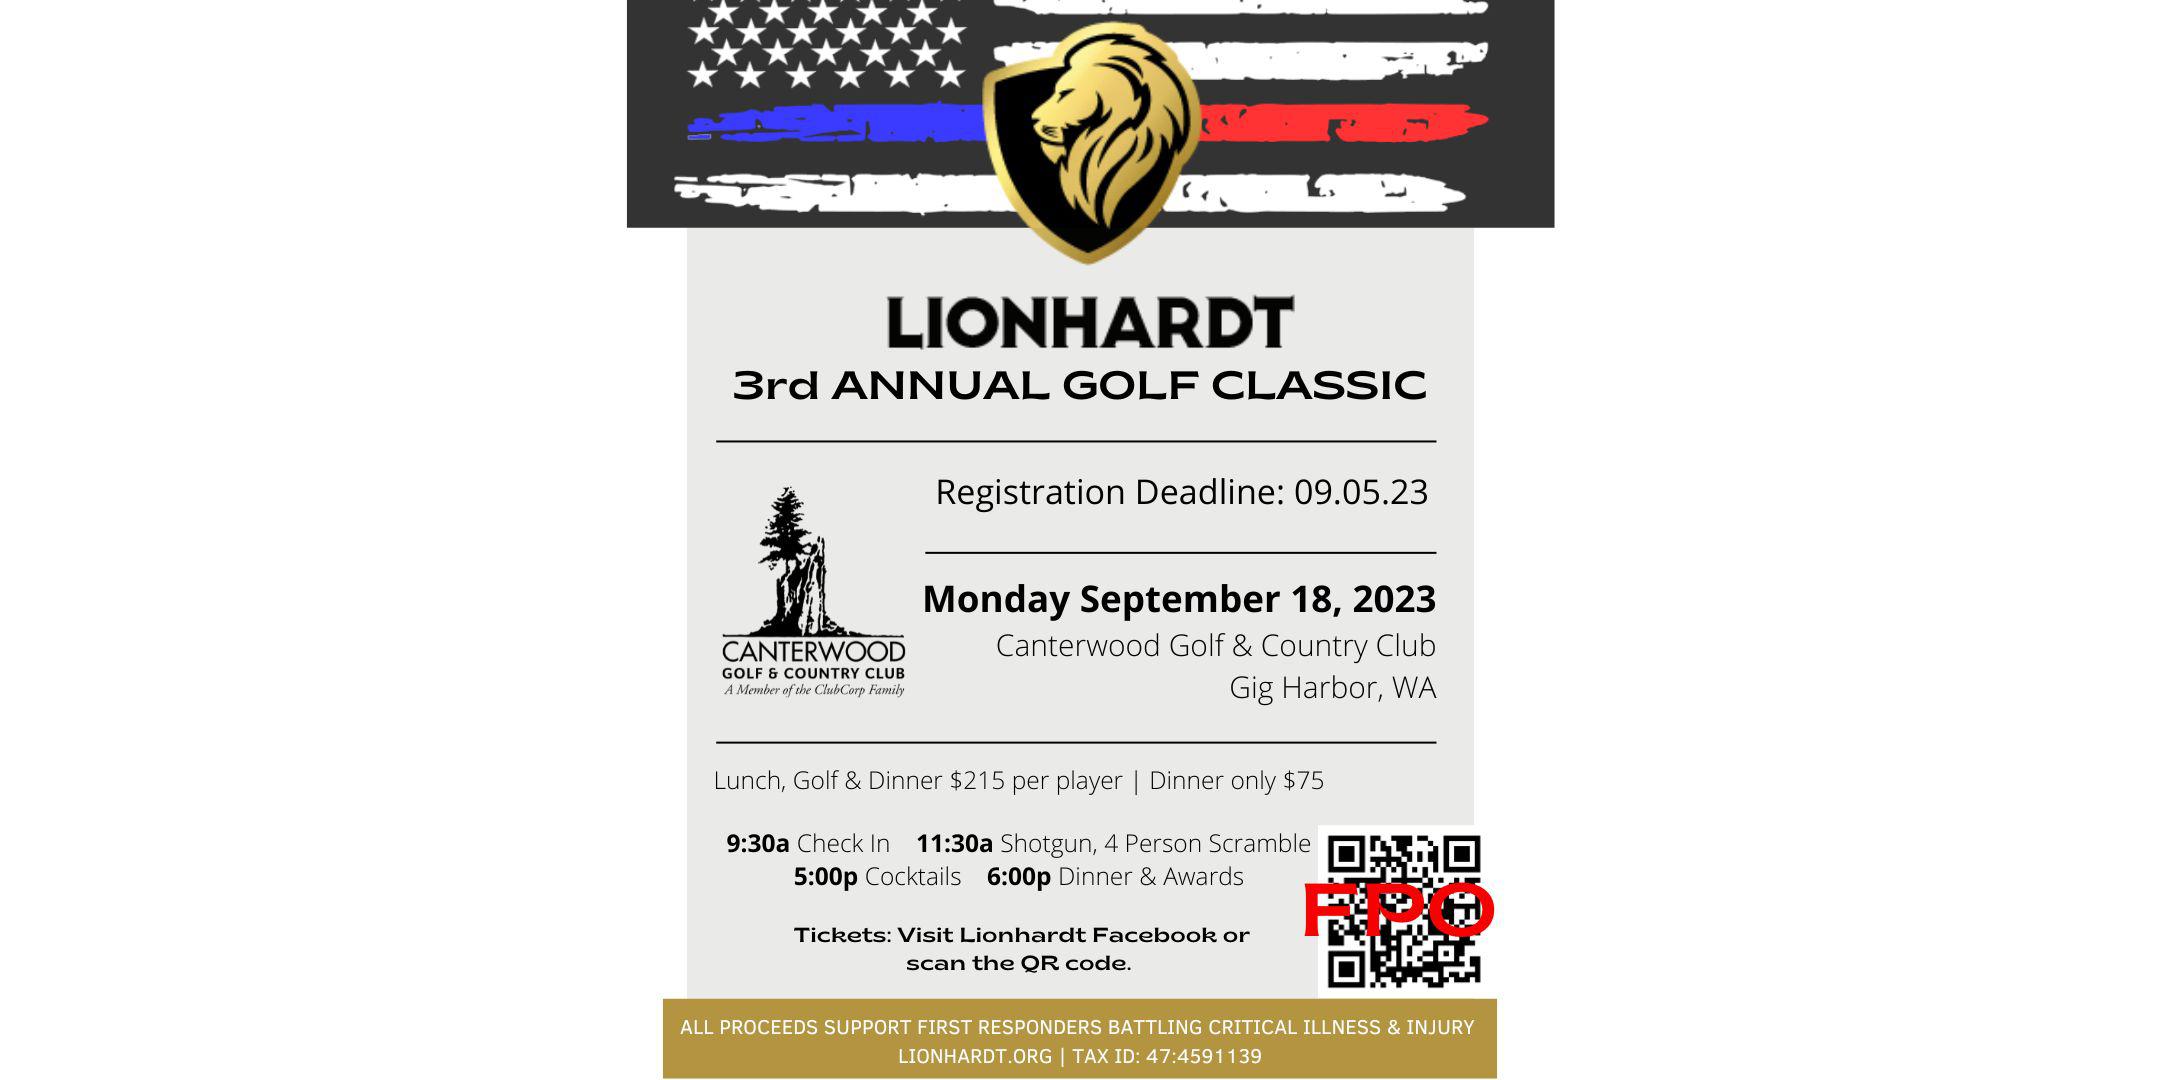 Lionhardt 3rd Annual Golf Classic